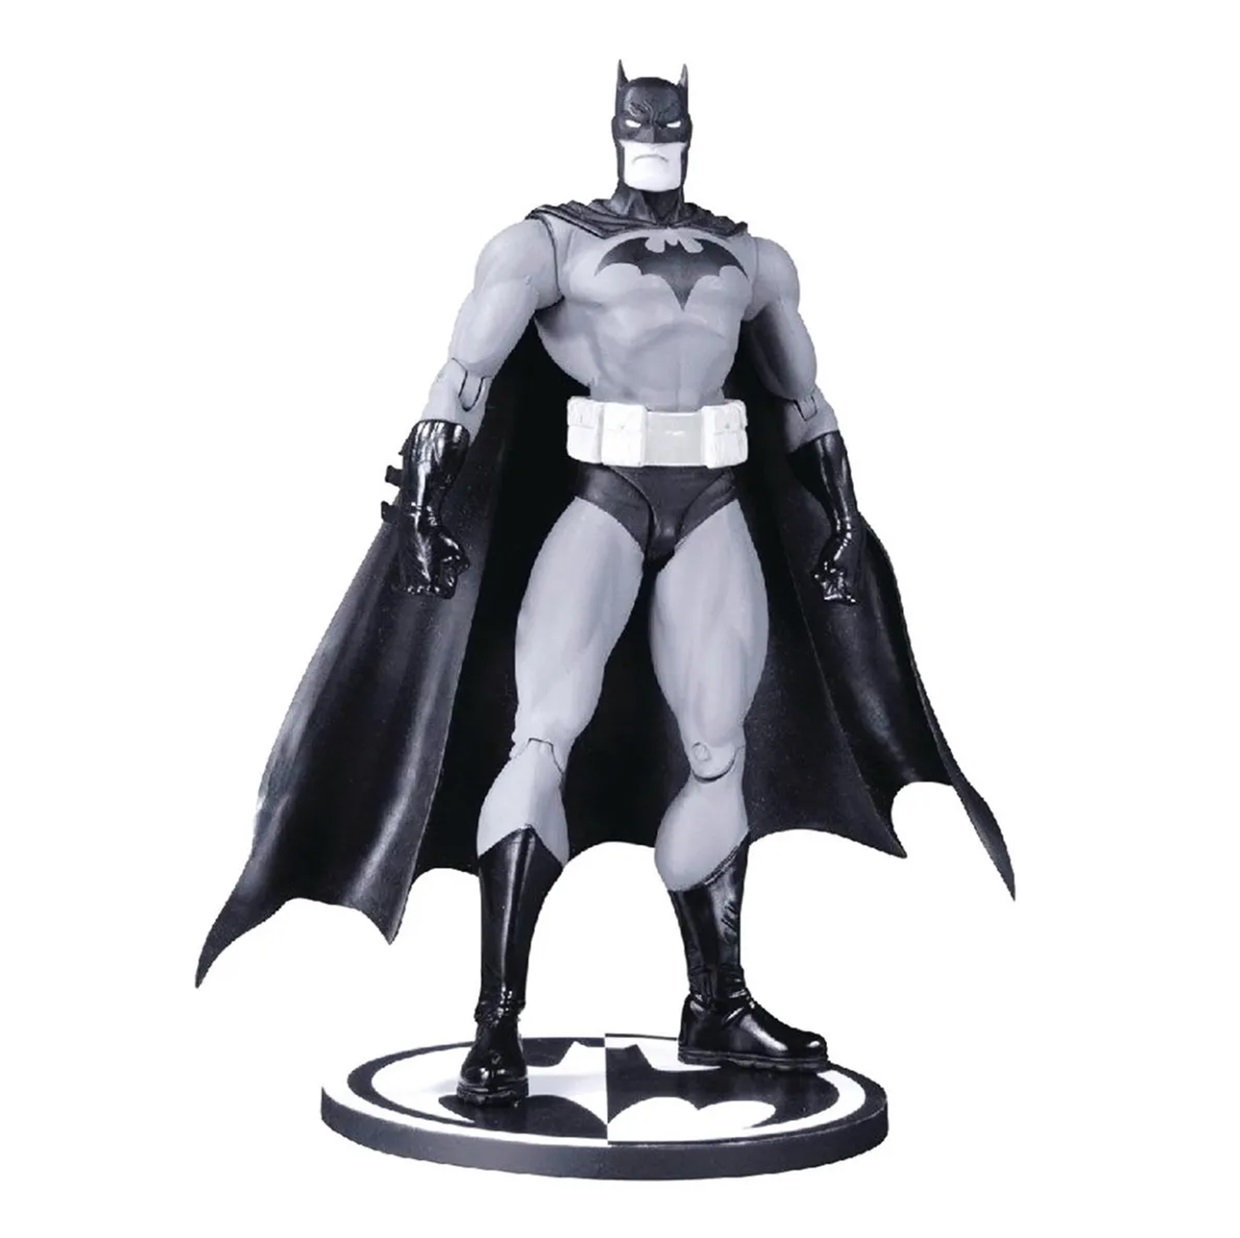 Batman Black & White Jim Lee Figura Dc Comics Collectibles 